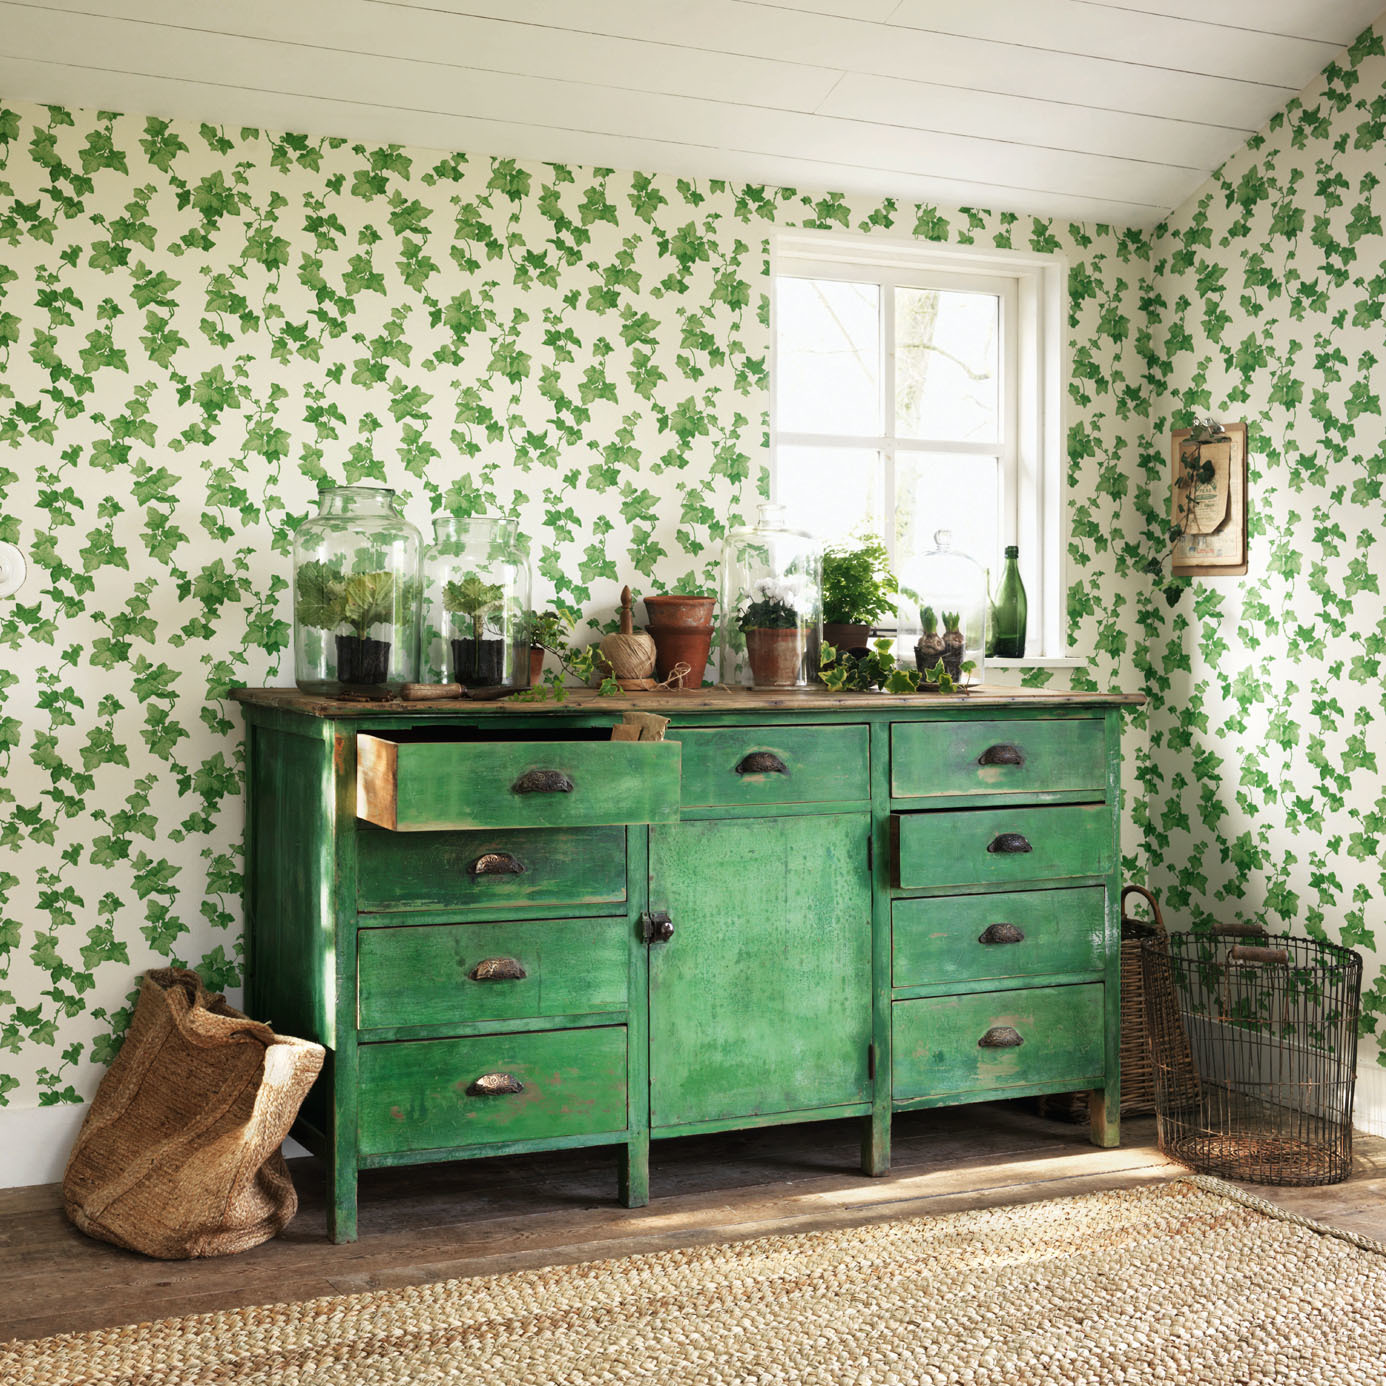 Hedera Green Wallpaper by SAN